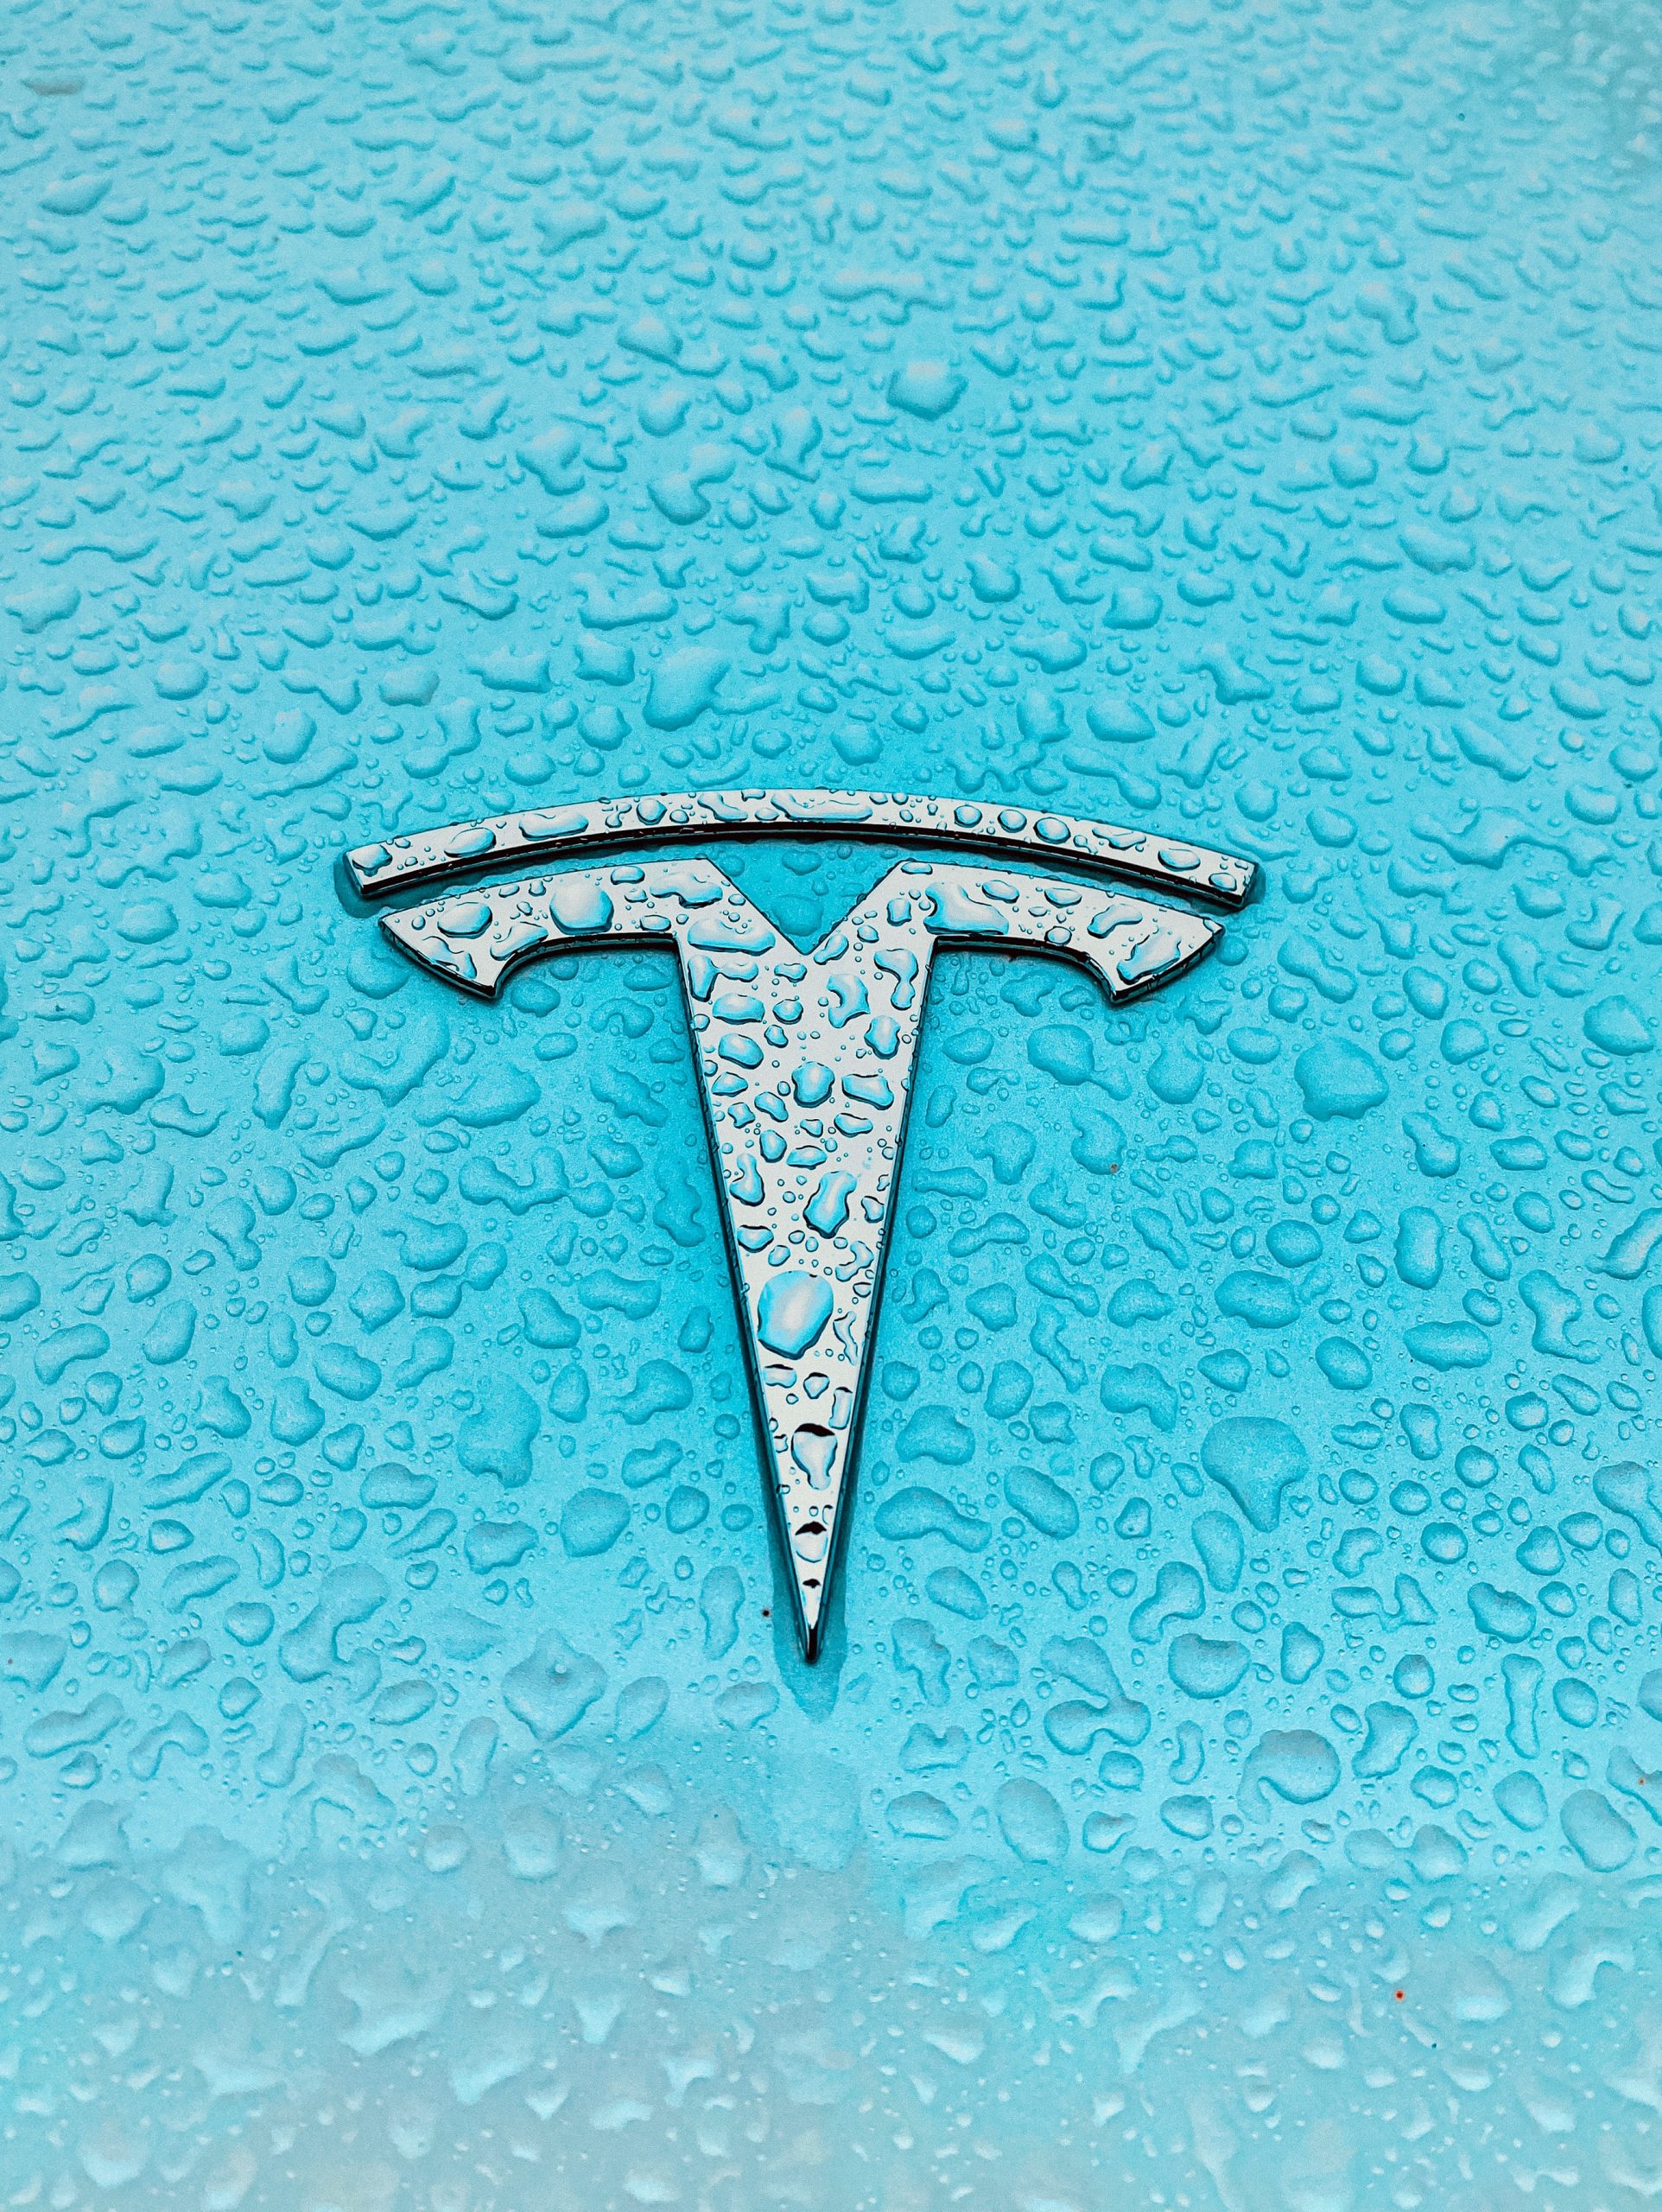 Tesla logo in front of car